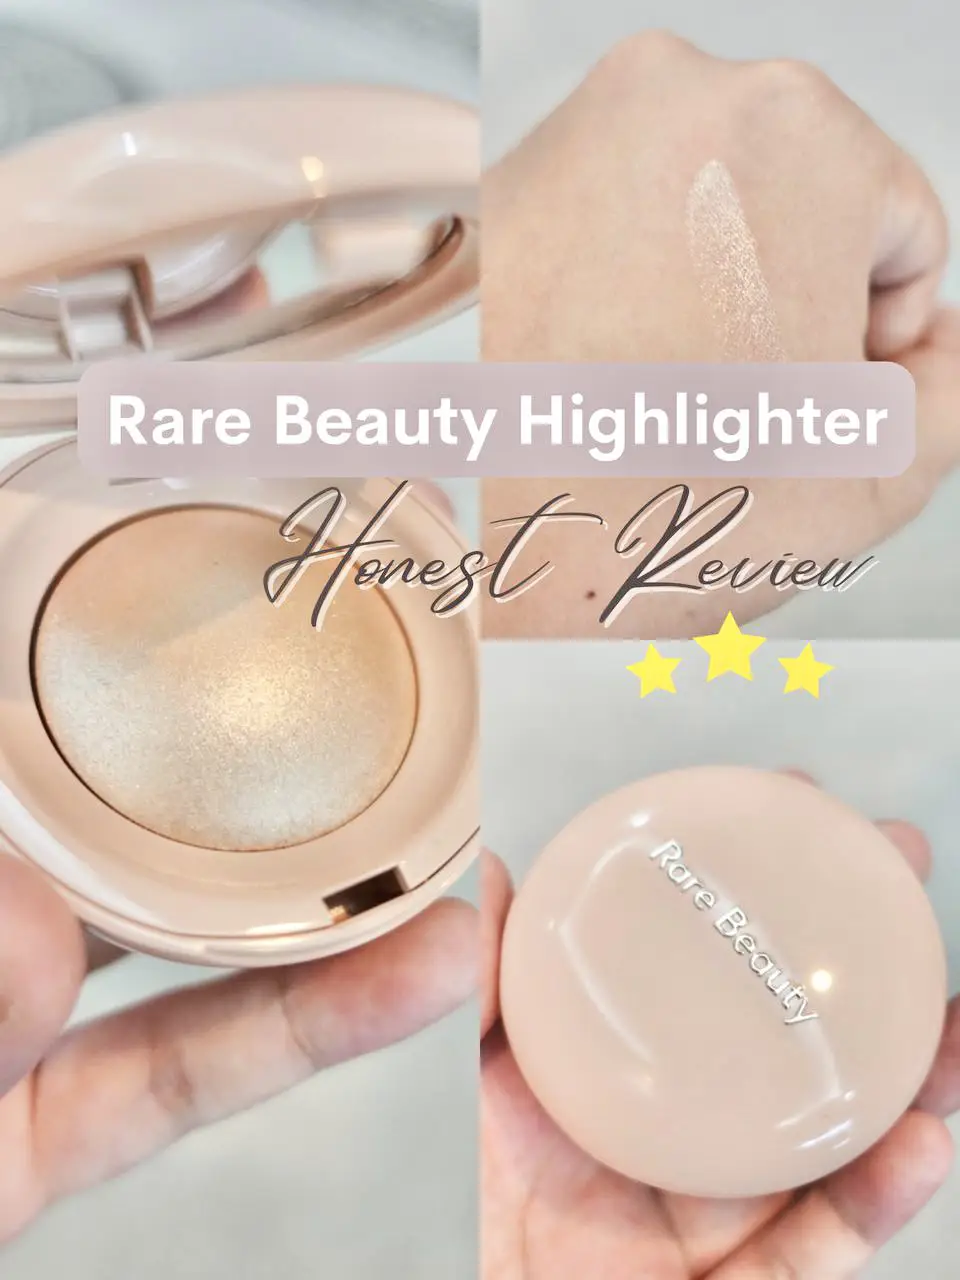 Honest Review on Rare beauty highlighter 😱✨